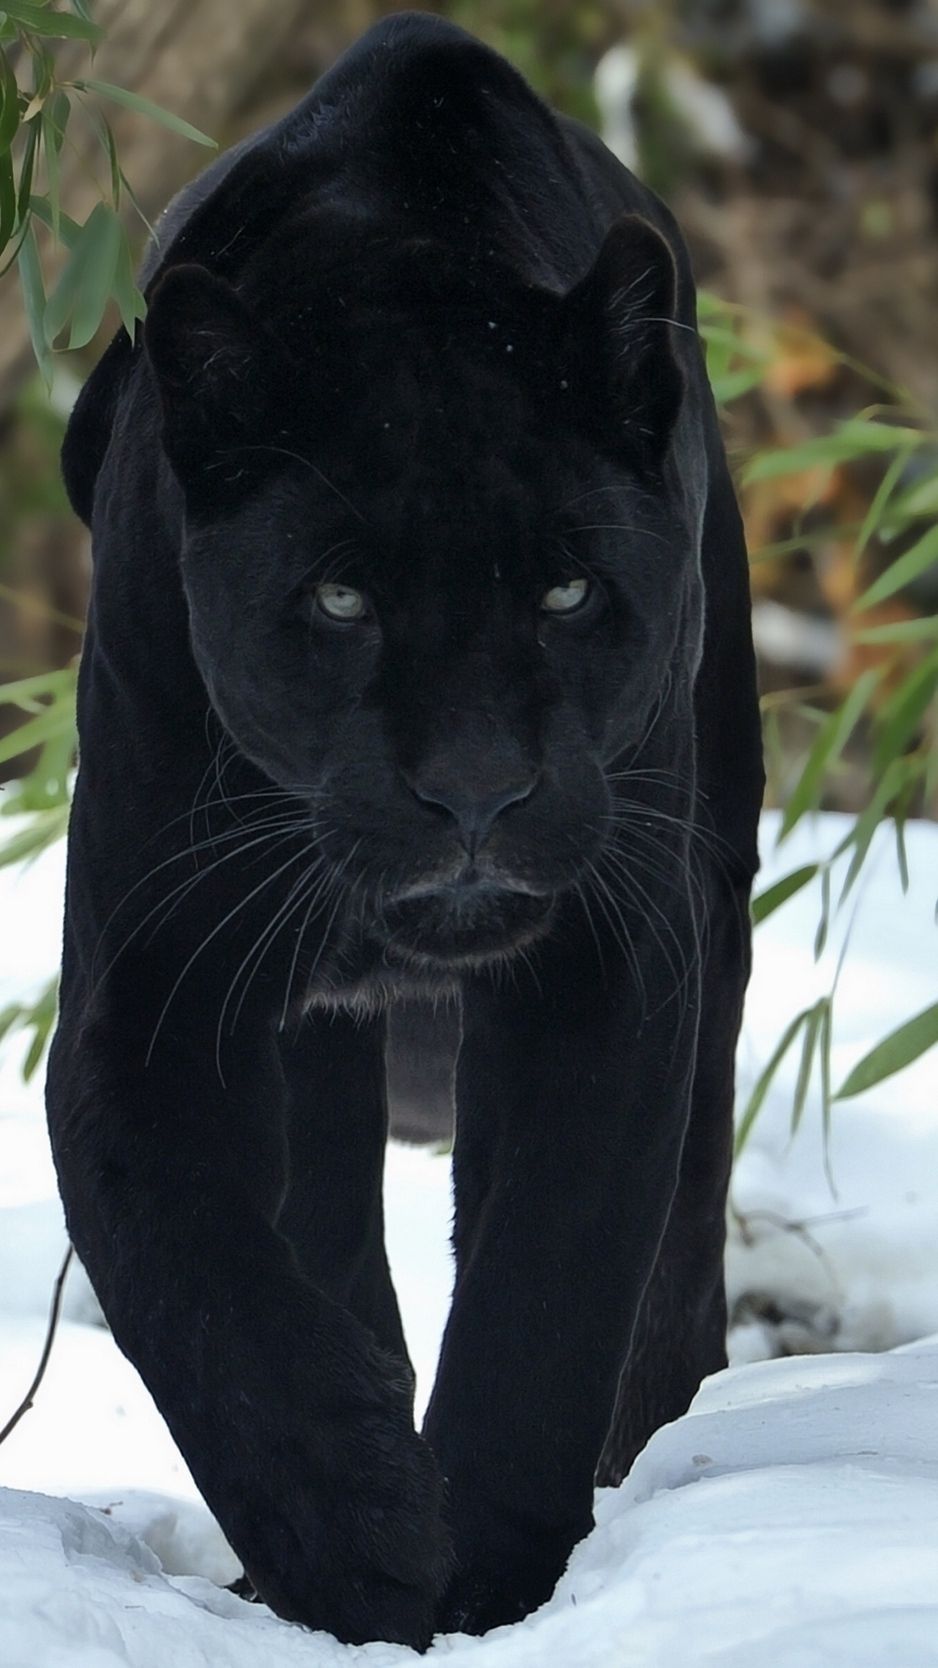 100+] Black Panther Animal Wallpapers | Wallpapers.com